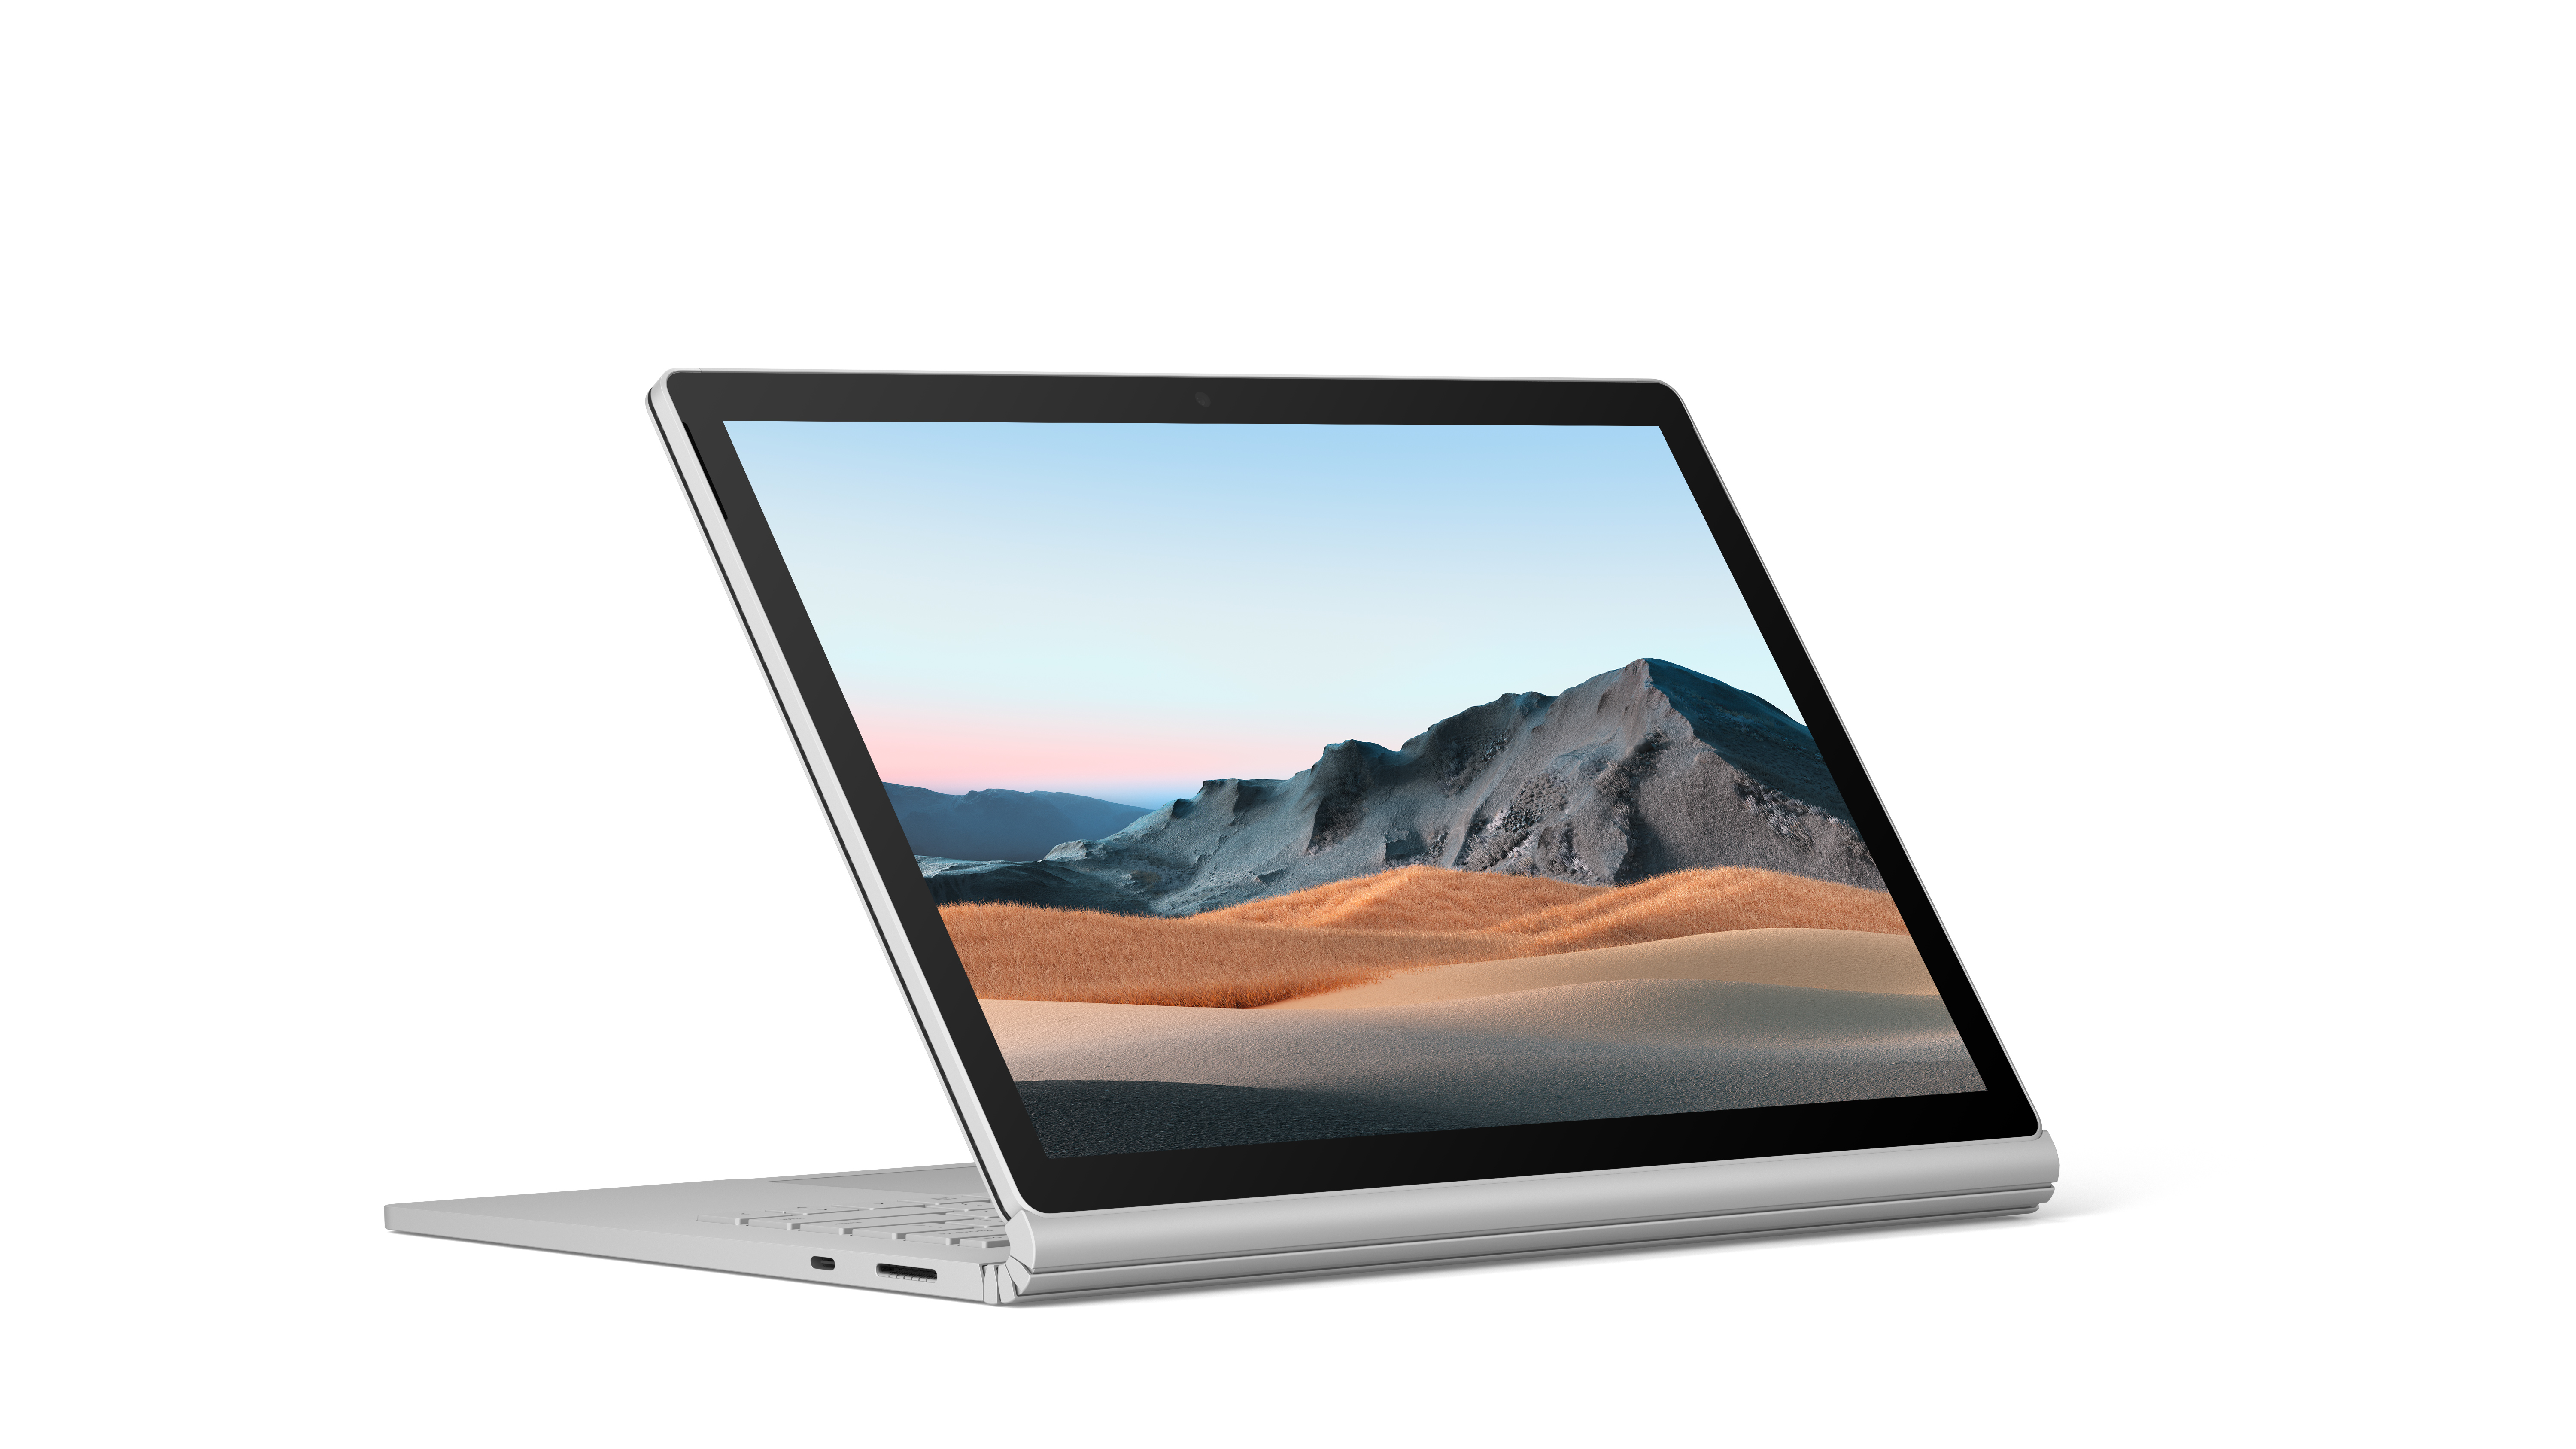 Microsoft Surface Book 3, 13" Touchscreen Laptop, Intel Core i5, 8GB RAM, 256GB SSD, Windows 10, Platinum, V6F-00001 - image 7 of 9